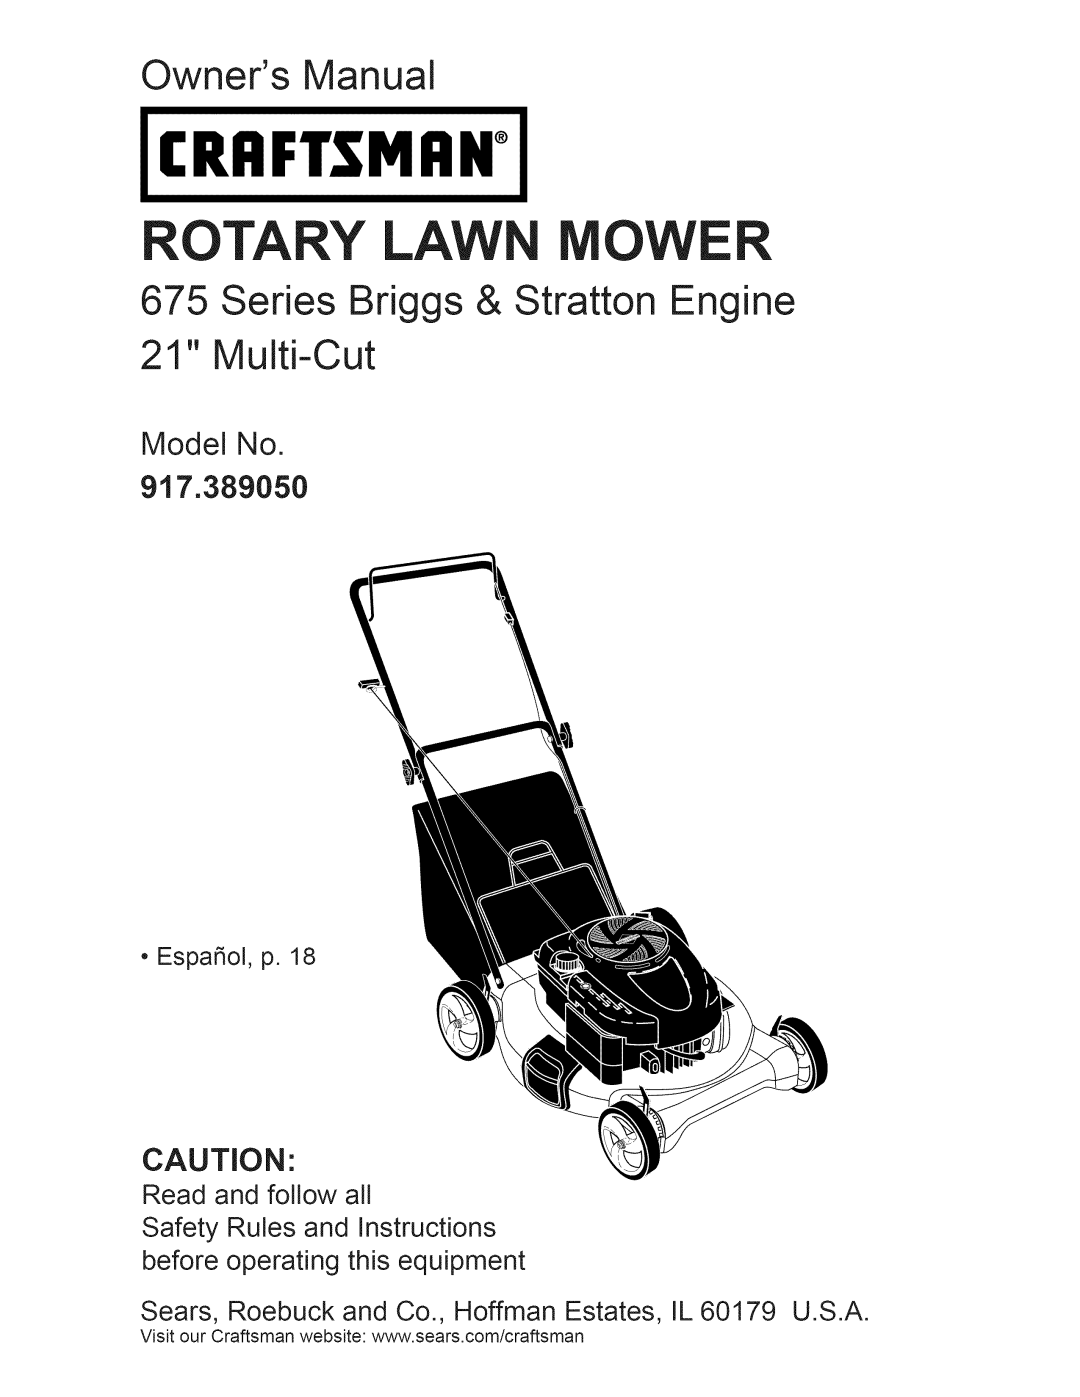 Craftsman owner manual Model No 917.389050, Craftsman, Rotary Lawn Mower, Owners Manual 